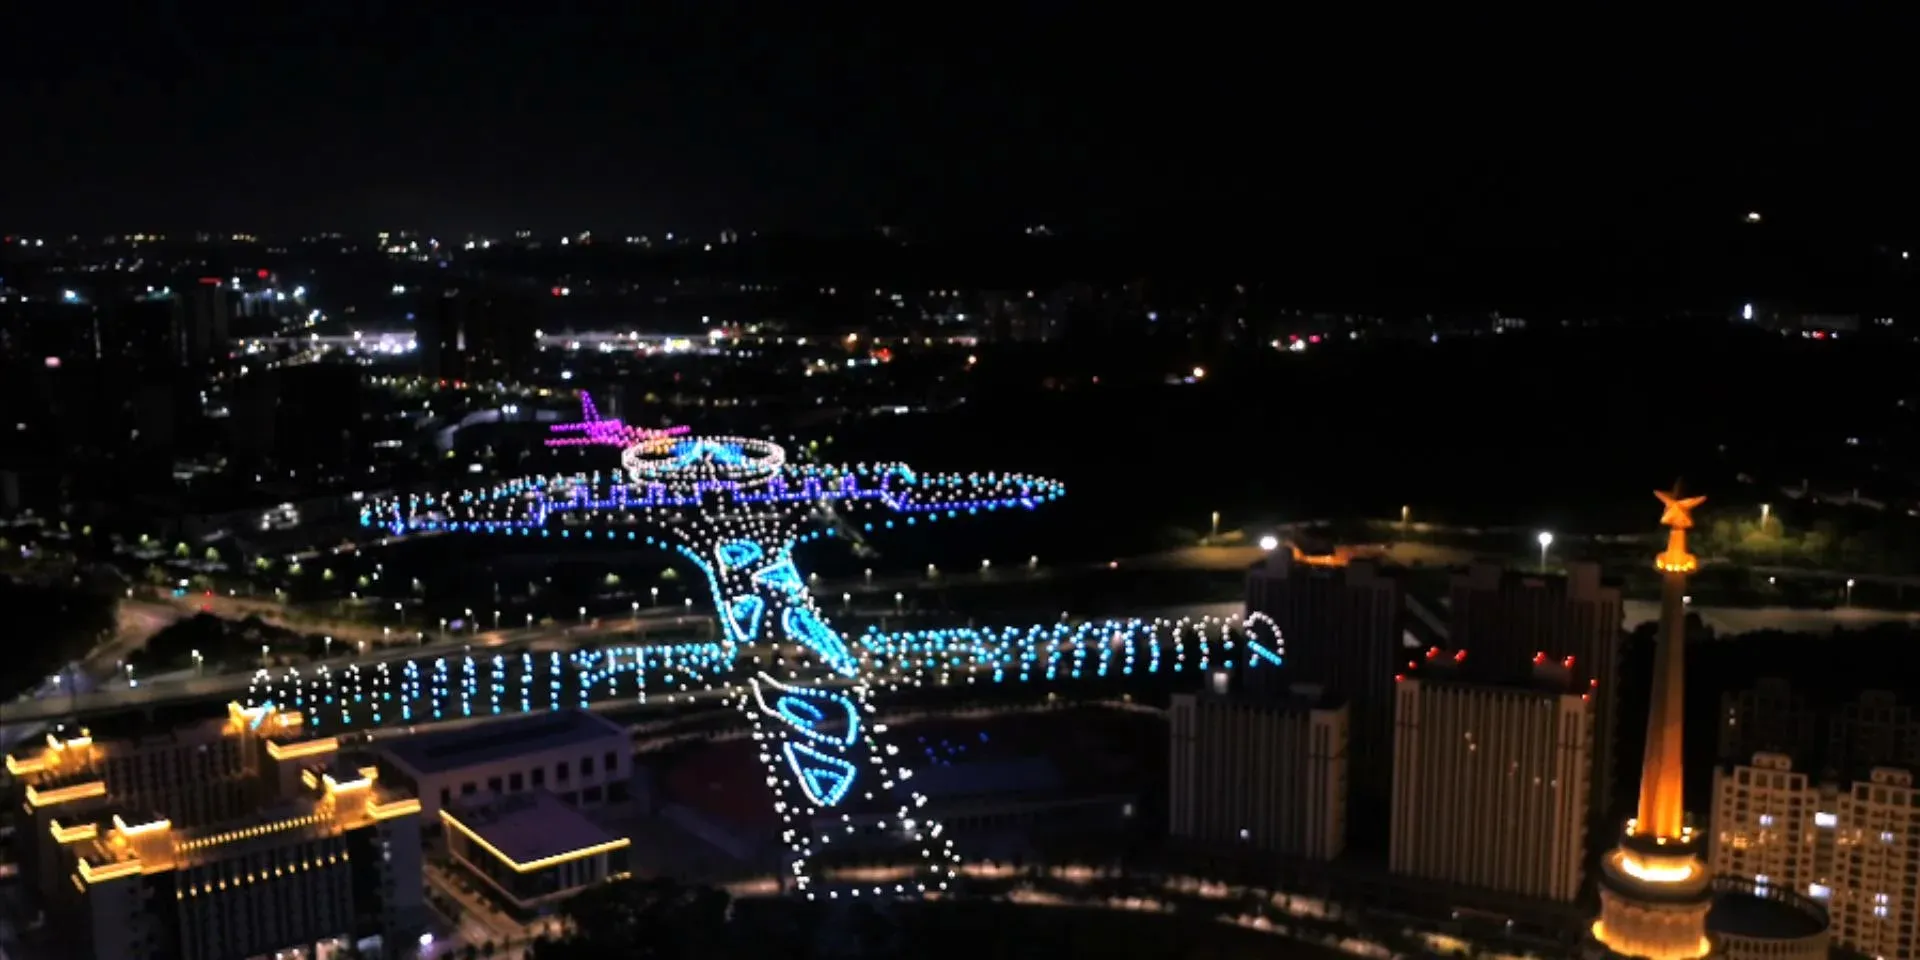 Drone swarm light show